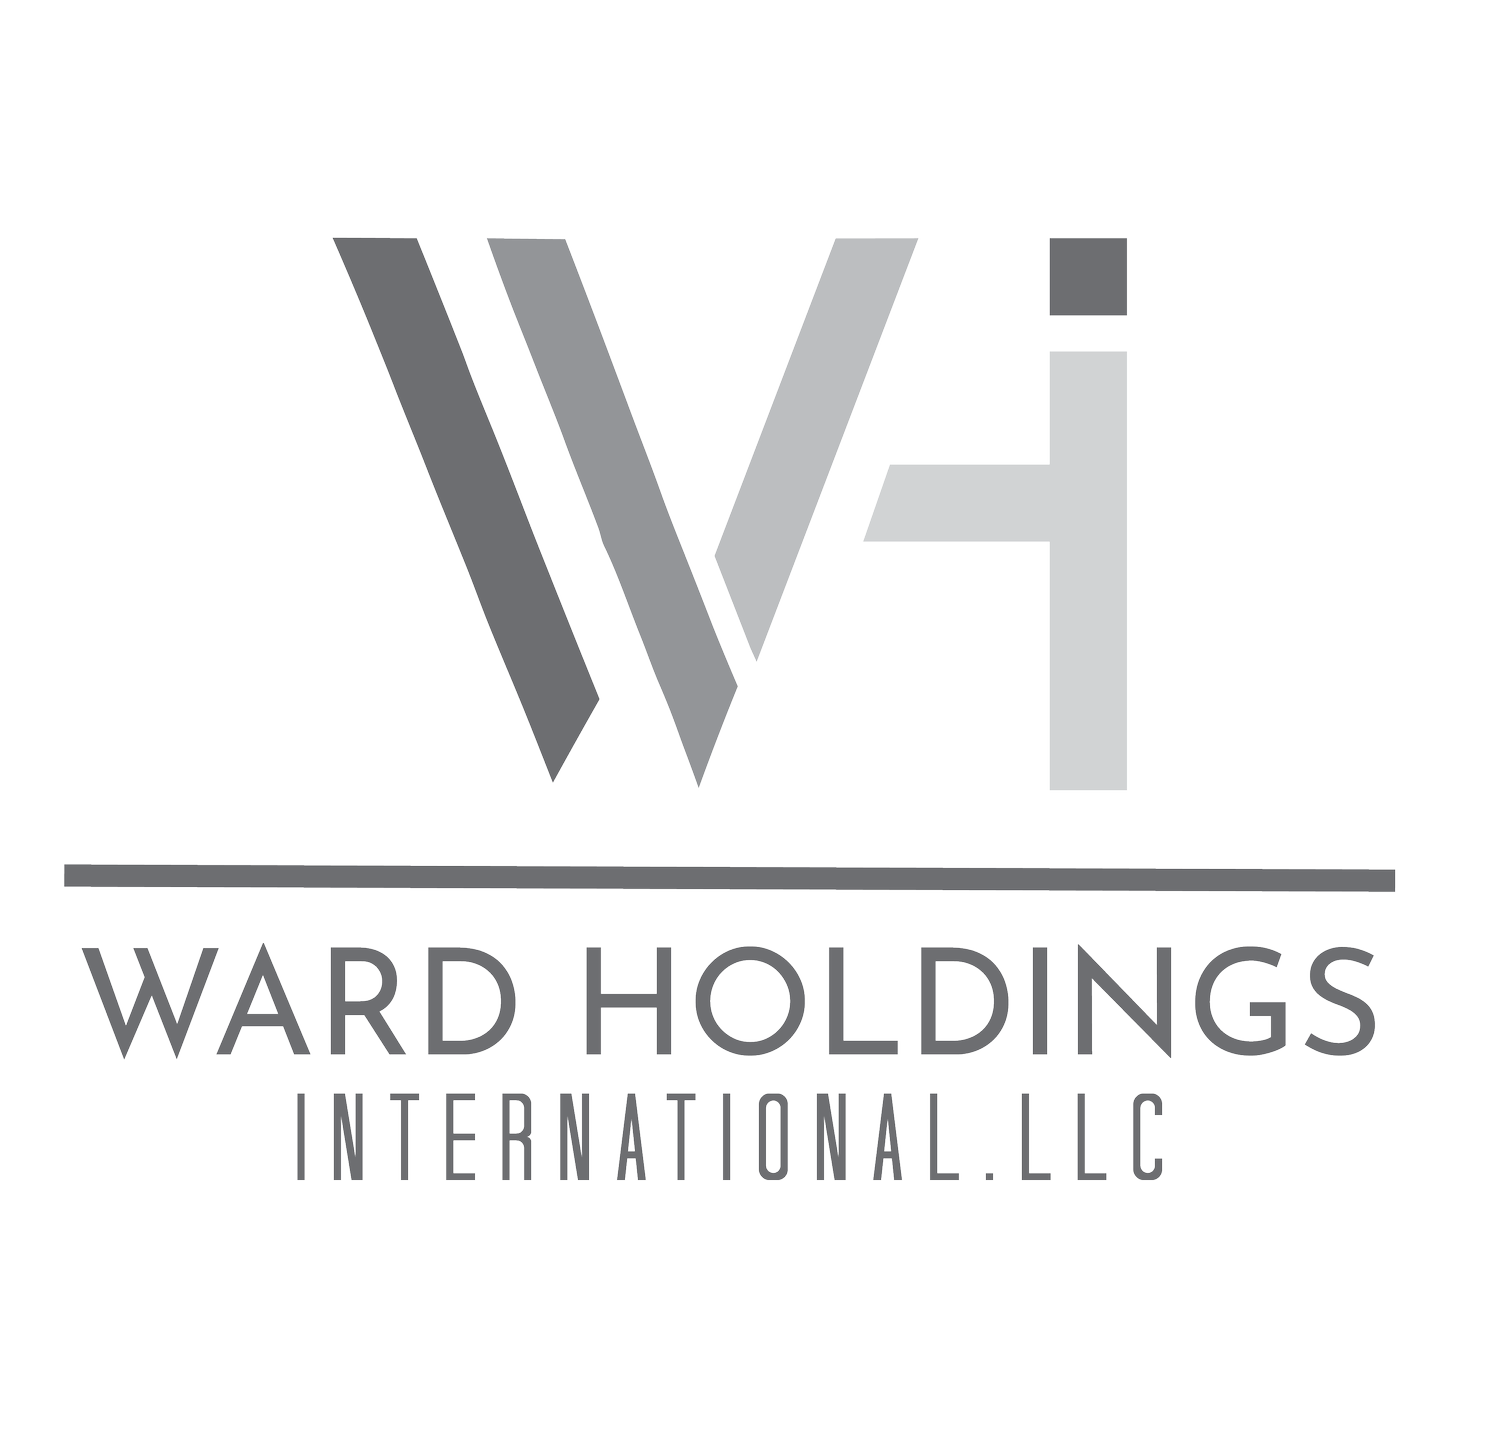 Ward Holdings International LLC